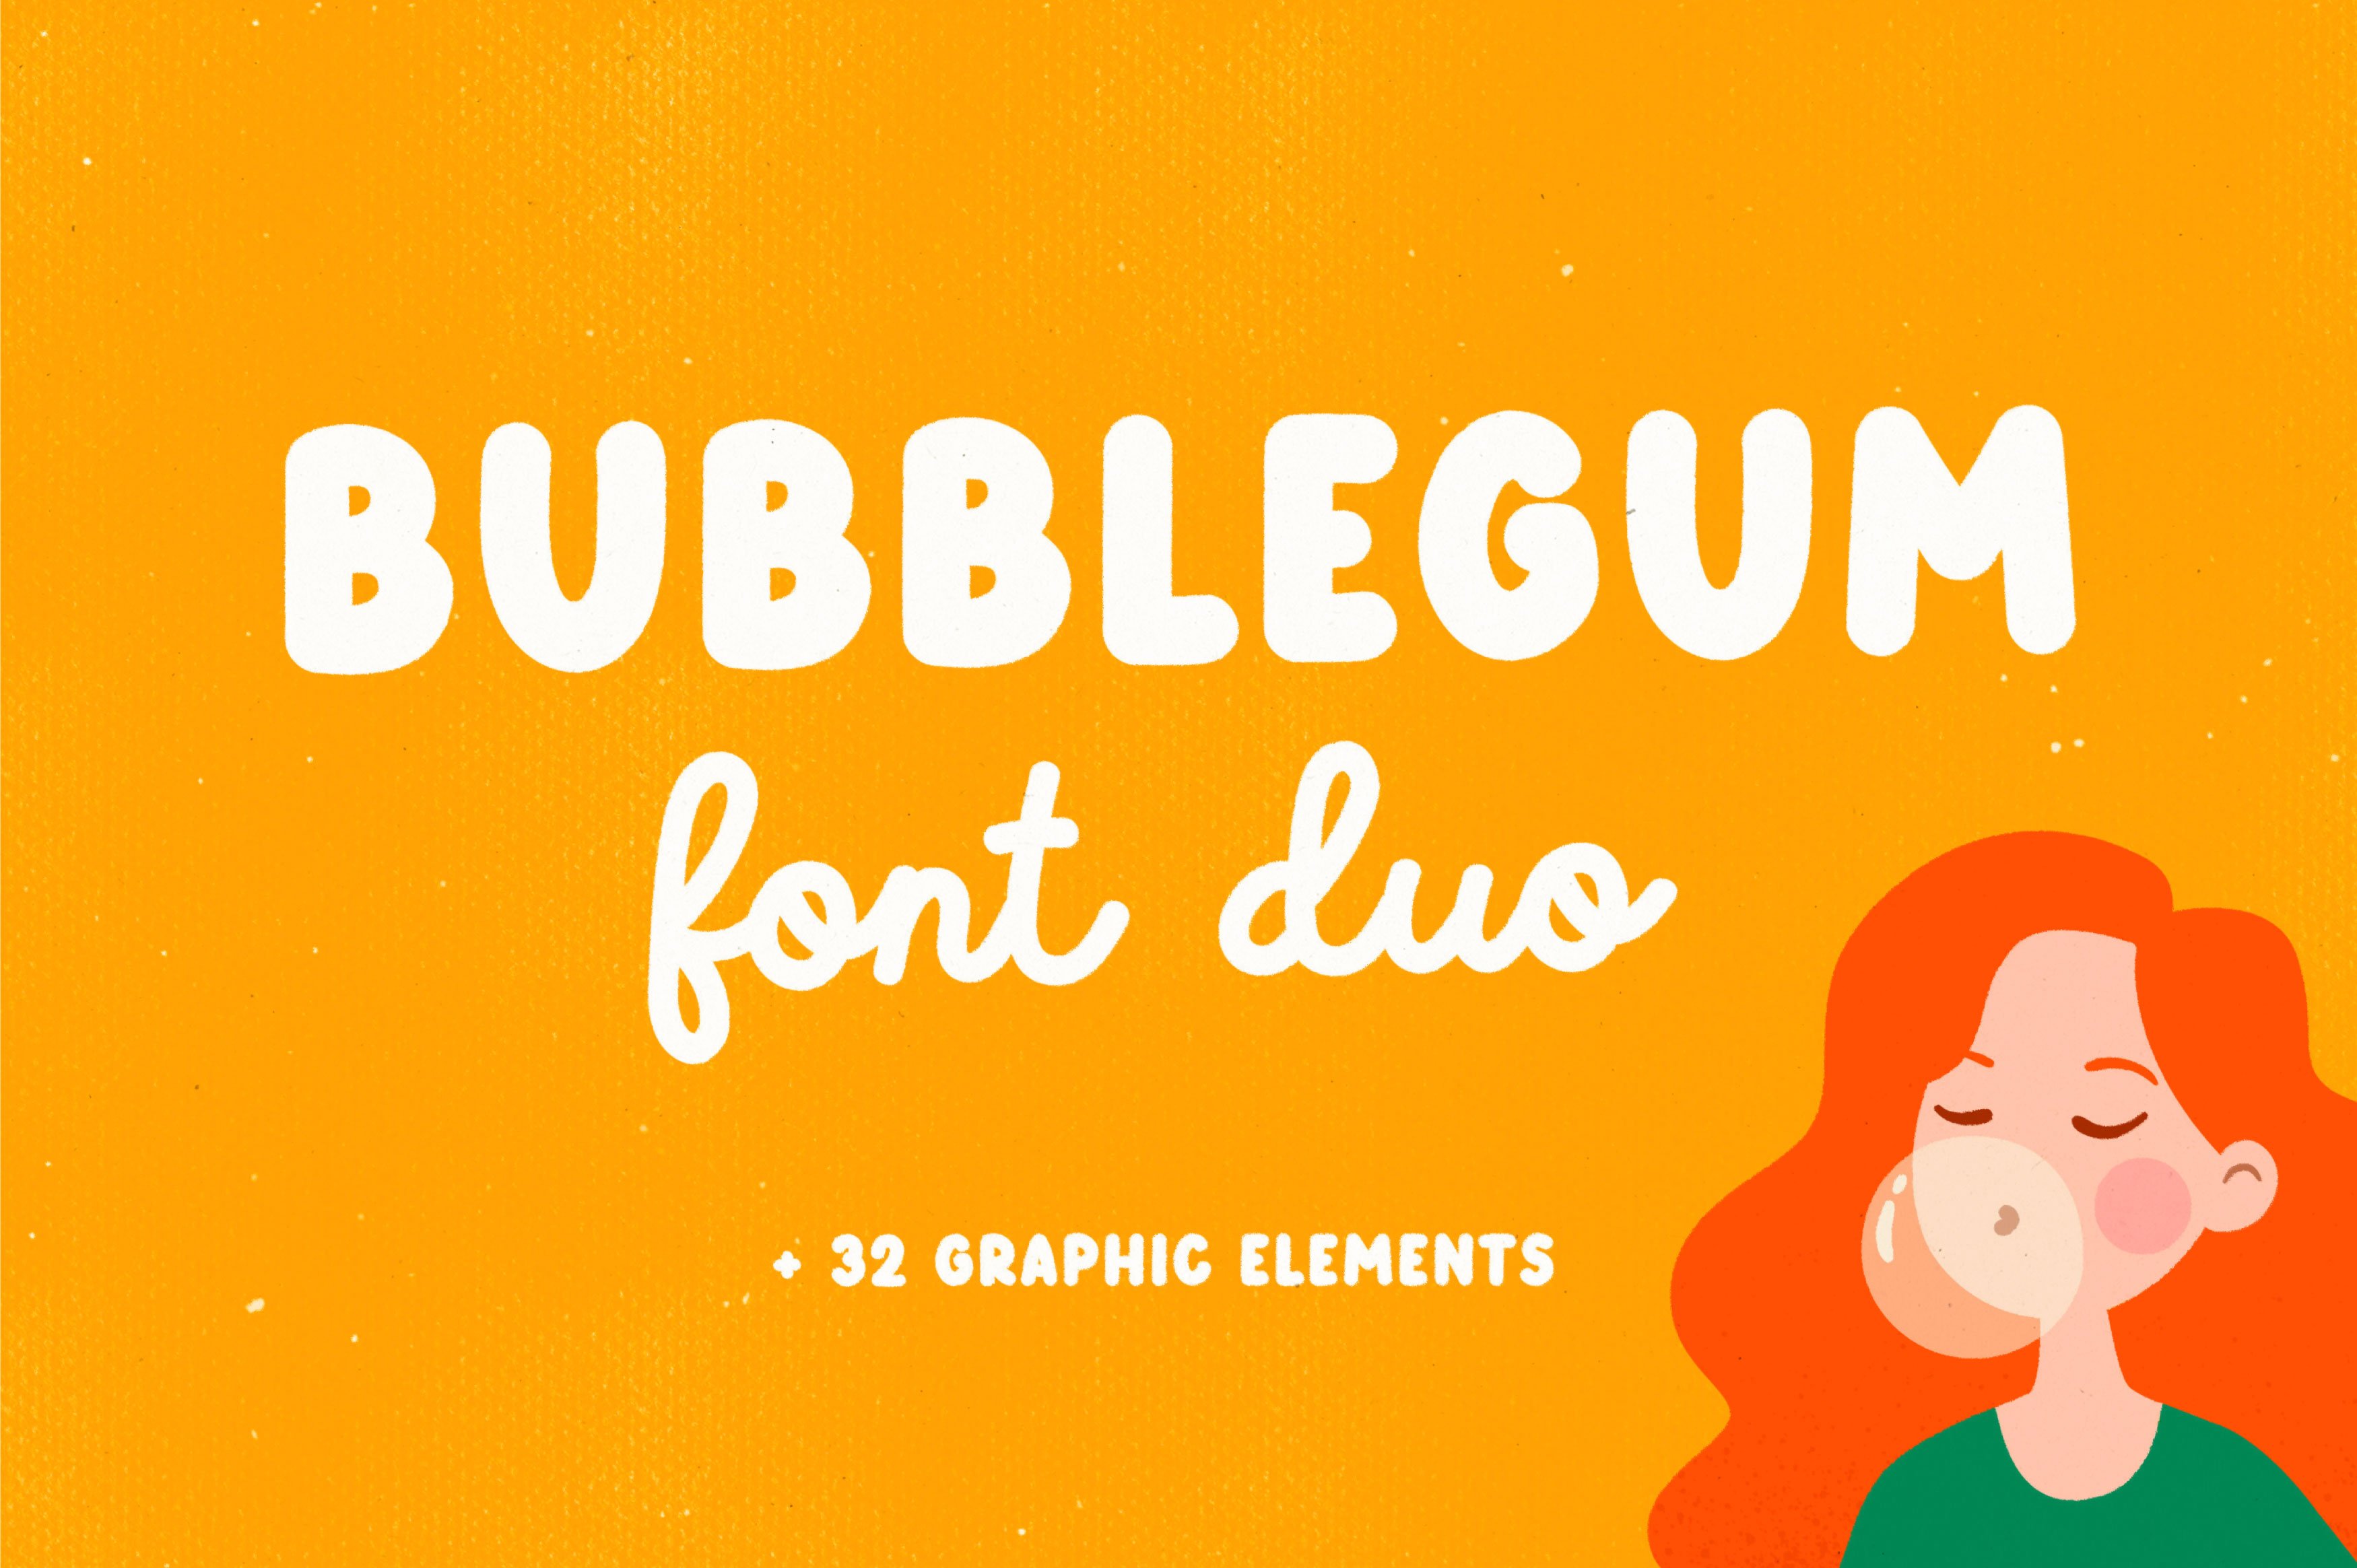 Bubblegum | Font duo cover image.